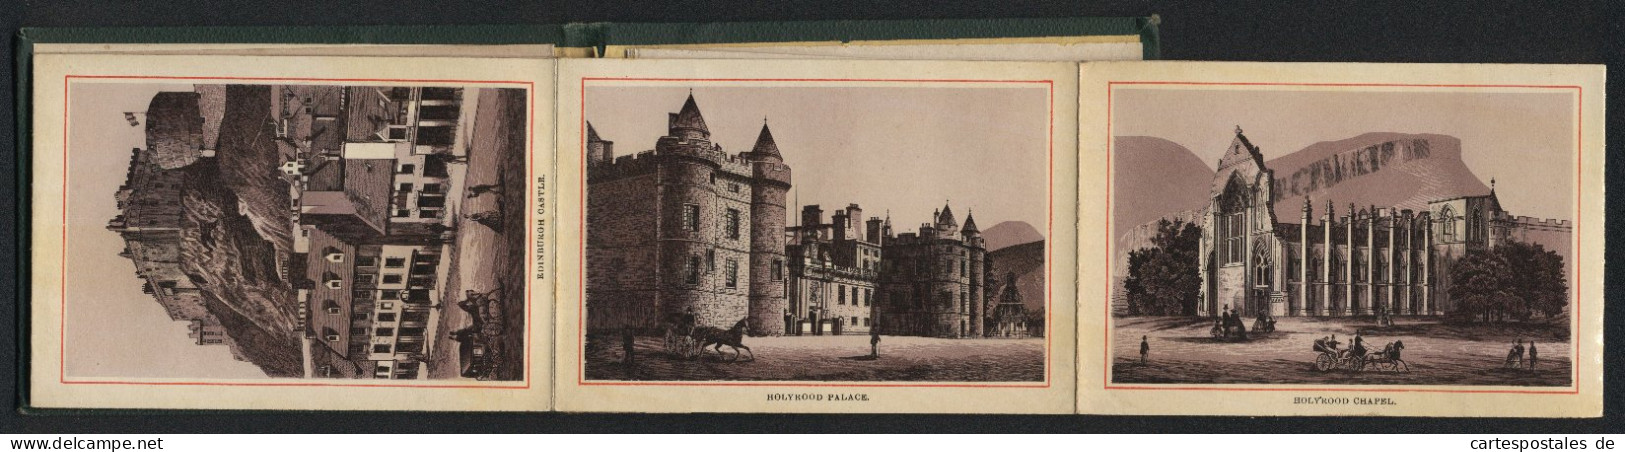 Leporello-Album Edinburgh Mit 12 Lithographie-Ansichten, Princes Street, Old Town, Scott Monument, John Knox House  - Litografía